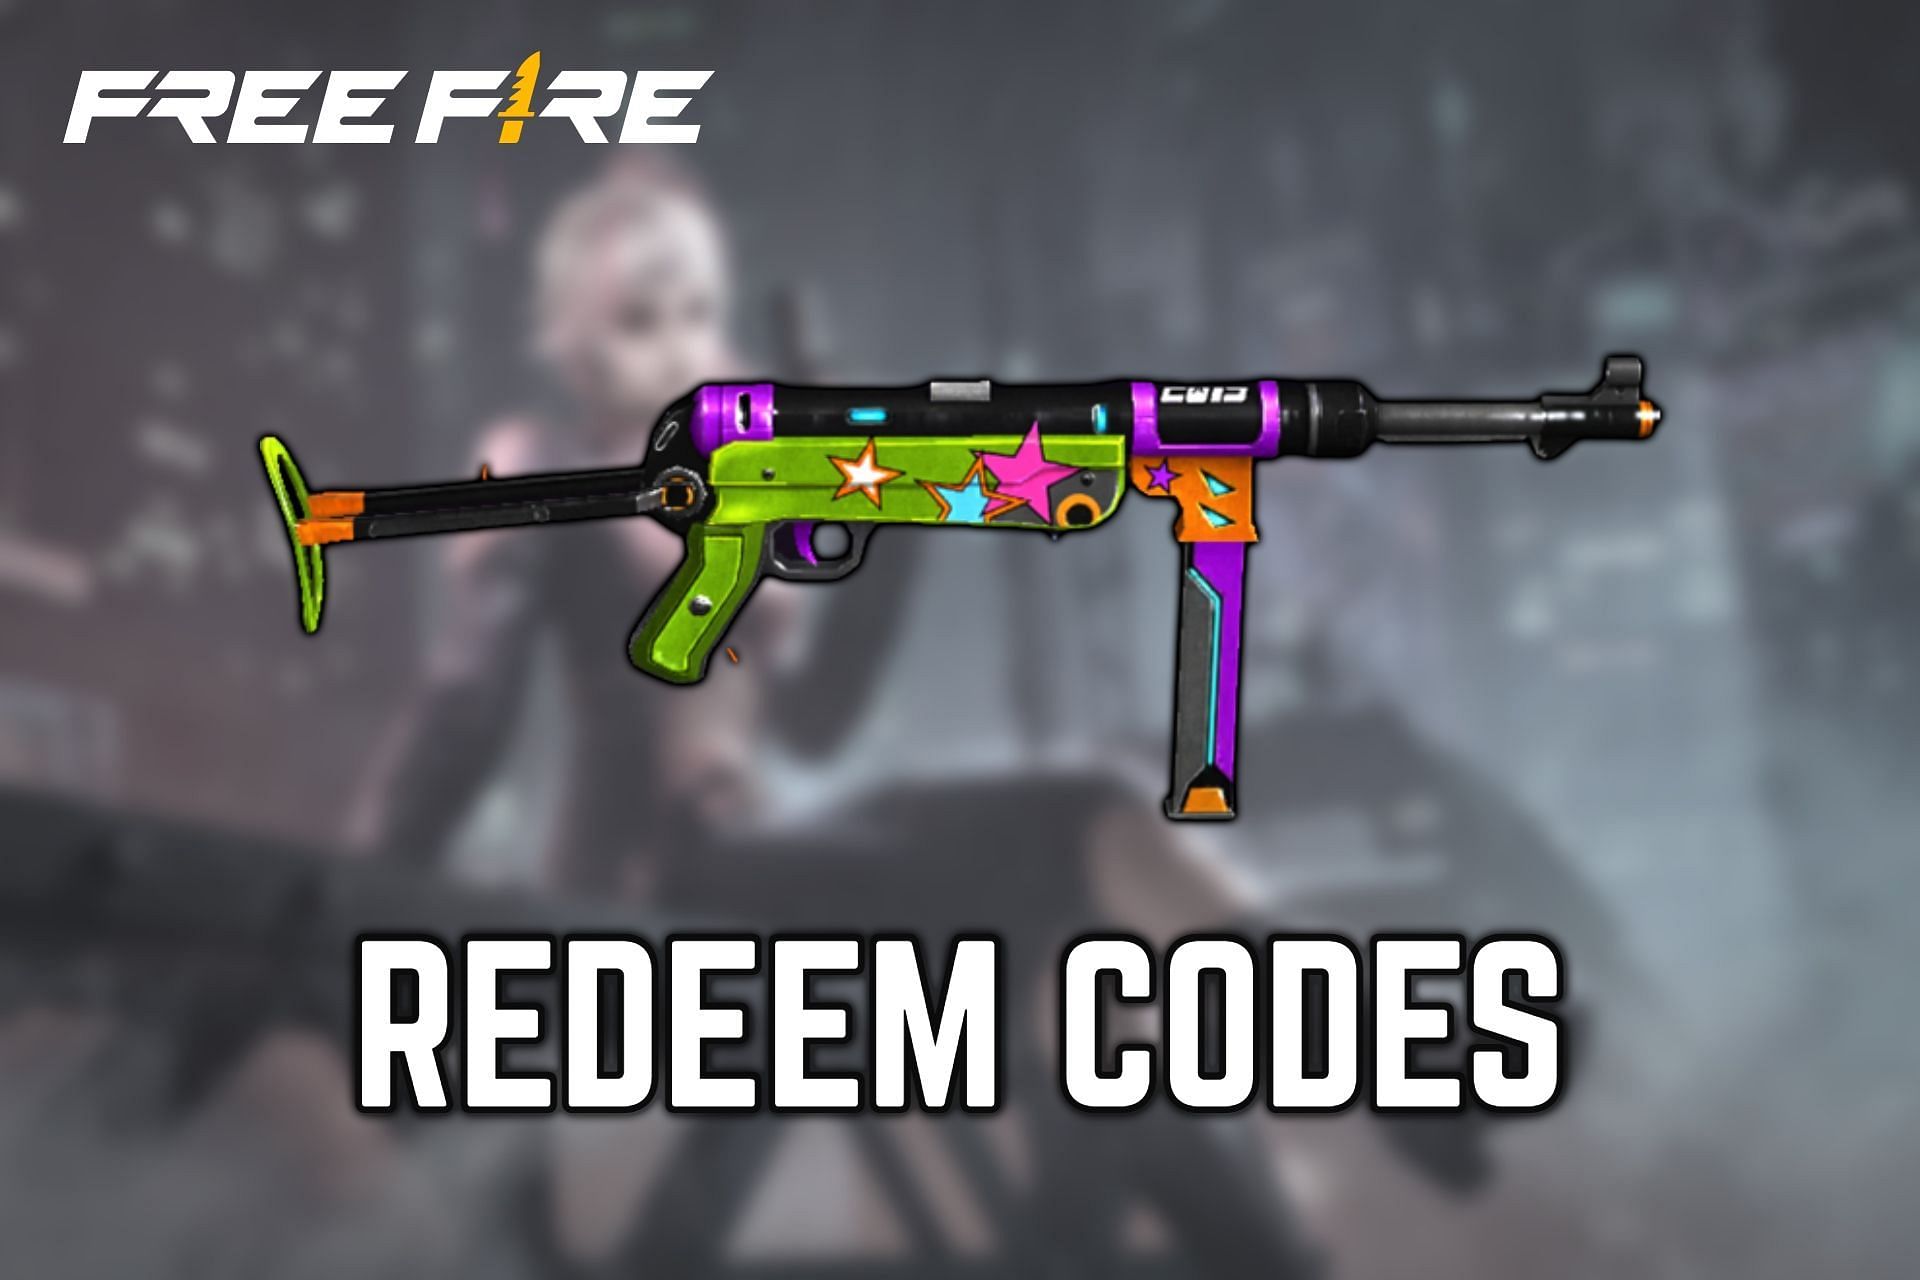 Players can earn free gun skins through Free Fire redeem codes (Image via Sportskeeda)